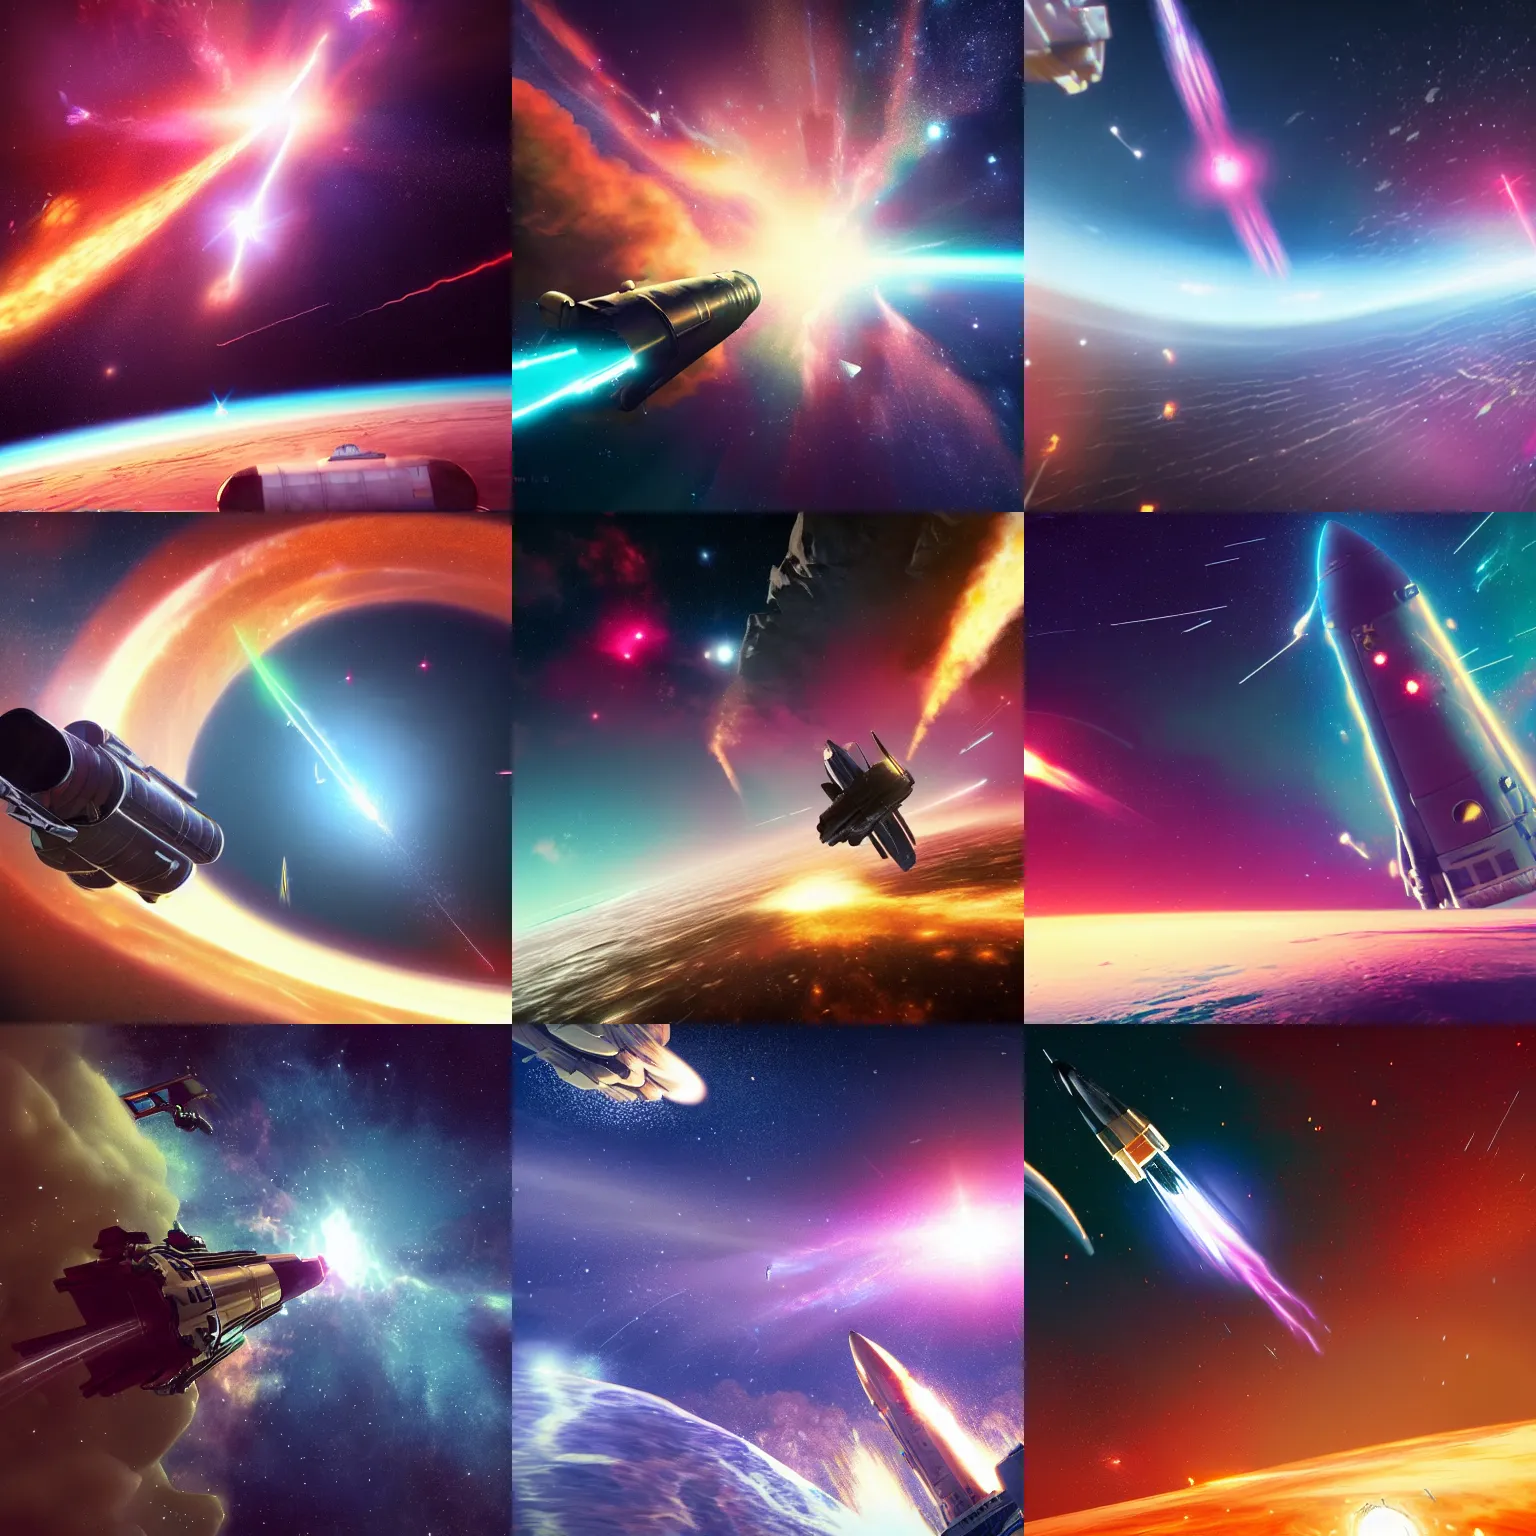 Prompt: a beautiful illustration of a rocket blasting through a galactic nebula, featured on artstation, no man's sky screenshot, still from interstellar